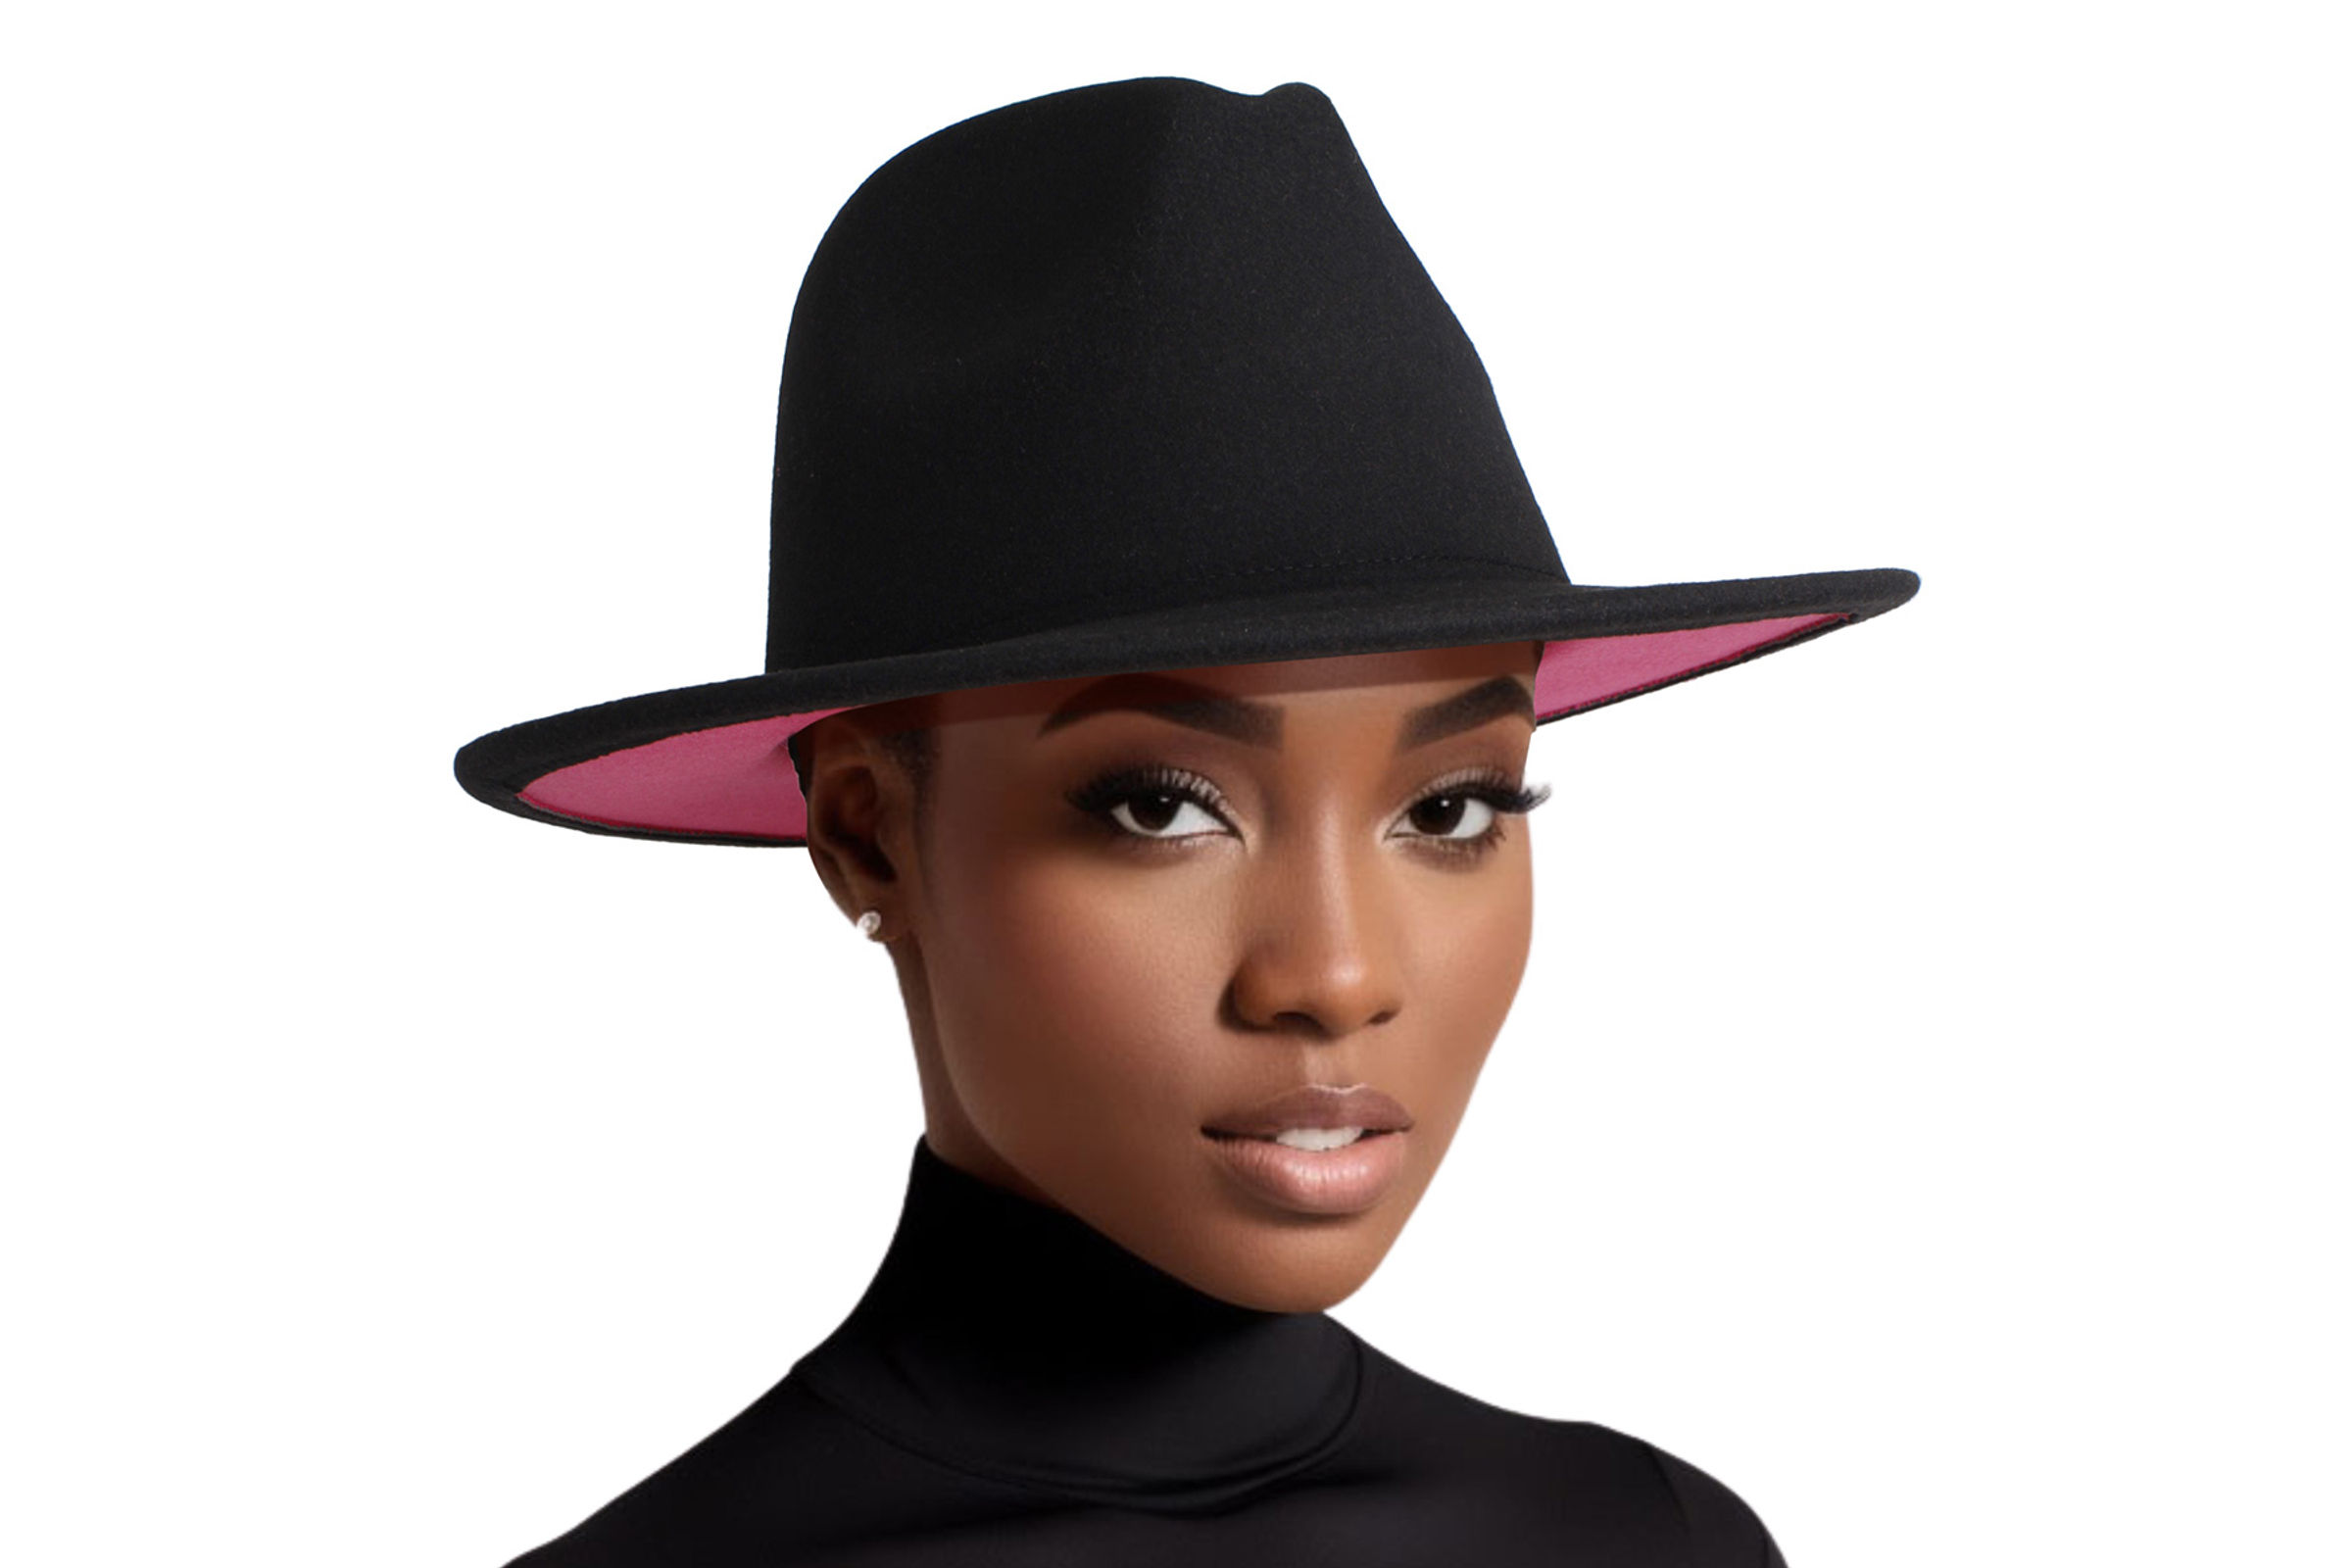 https://cdnimg.pinktownusa.com/tr:h-,w-,cm-pad_resize/media/catalog/product/image/107325b0c/fedora-black-pink-two-tone-wide-brim-hat-for-women.jpg?ik-sdk-version=php-1.2.2